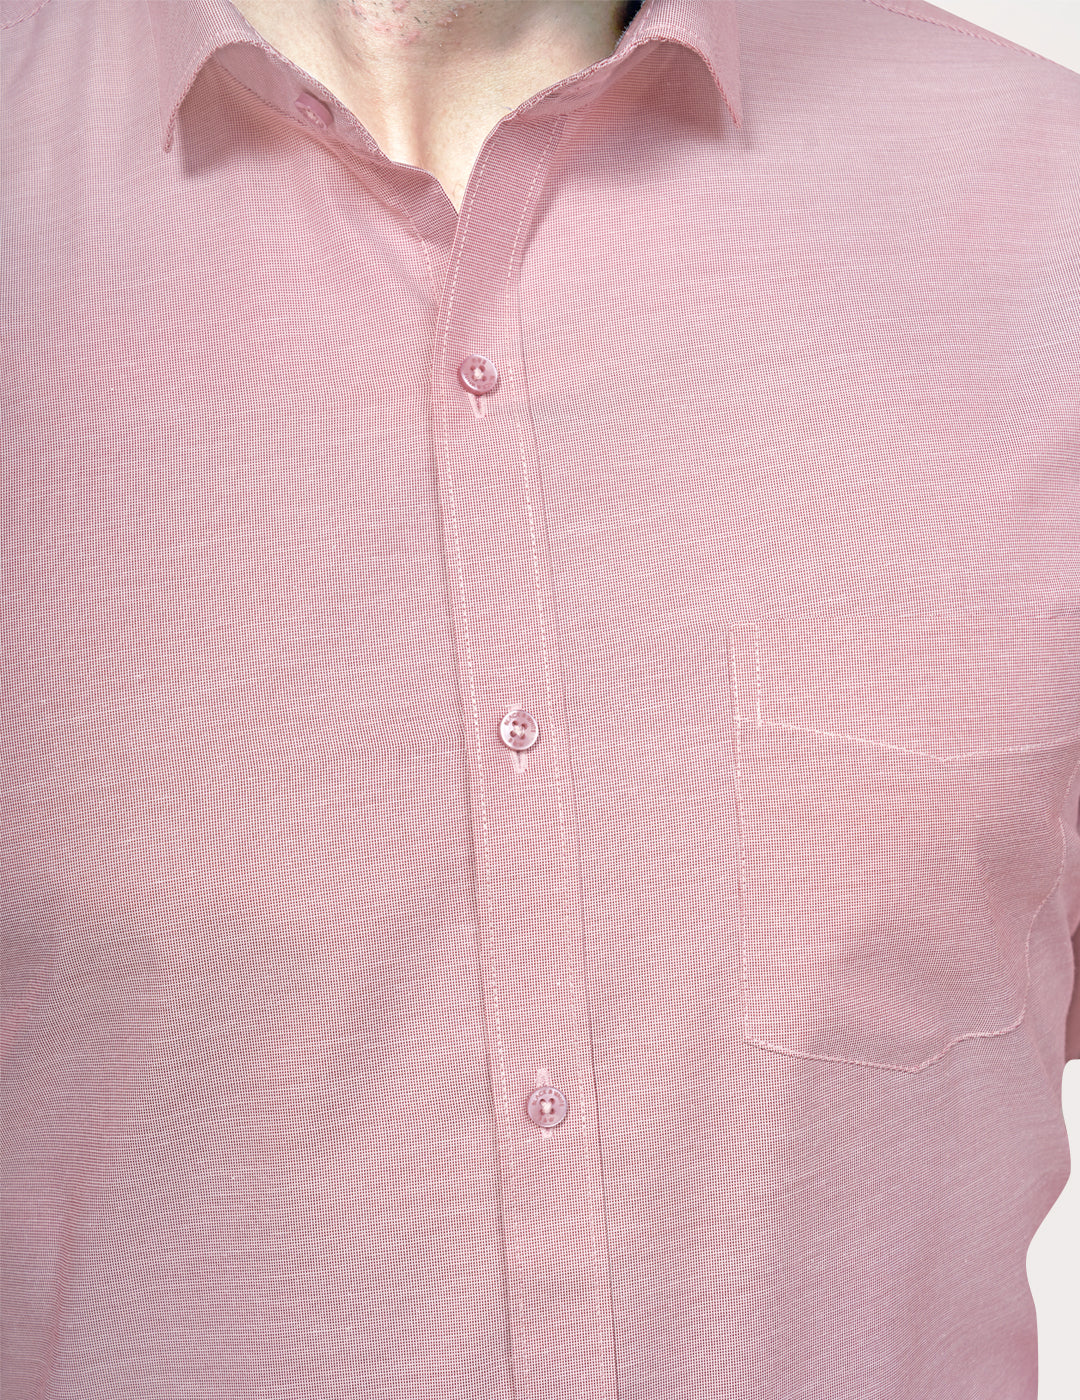 Black & White Men's Formal Shirt Dark Pink